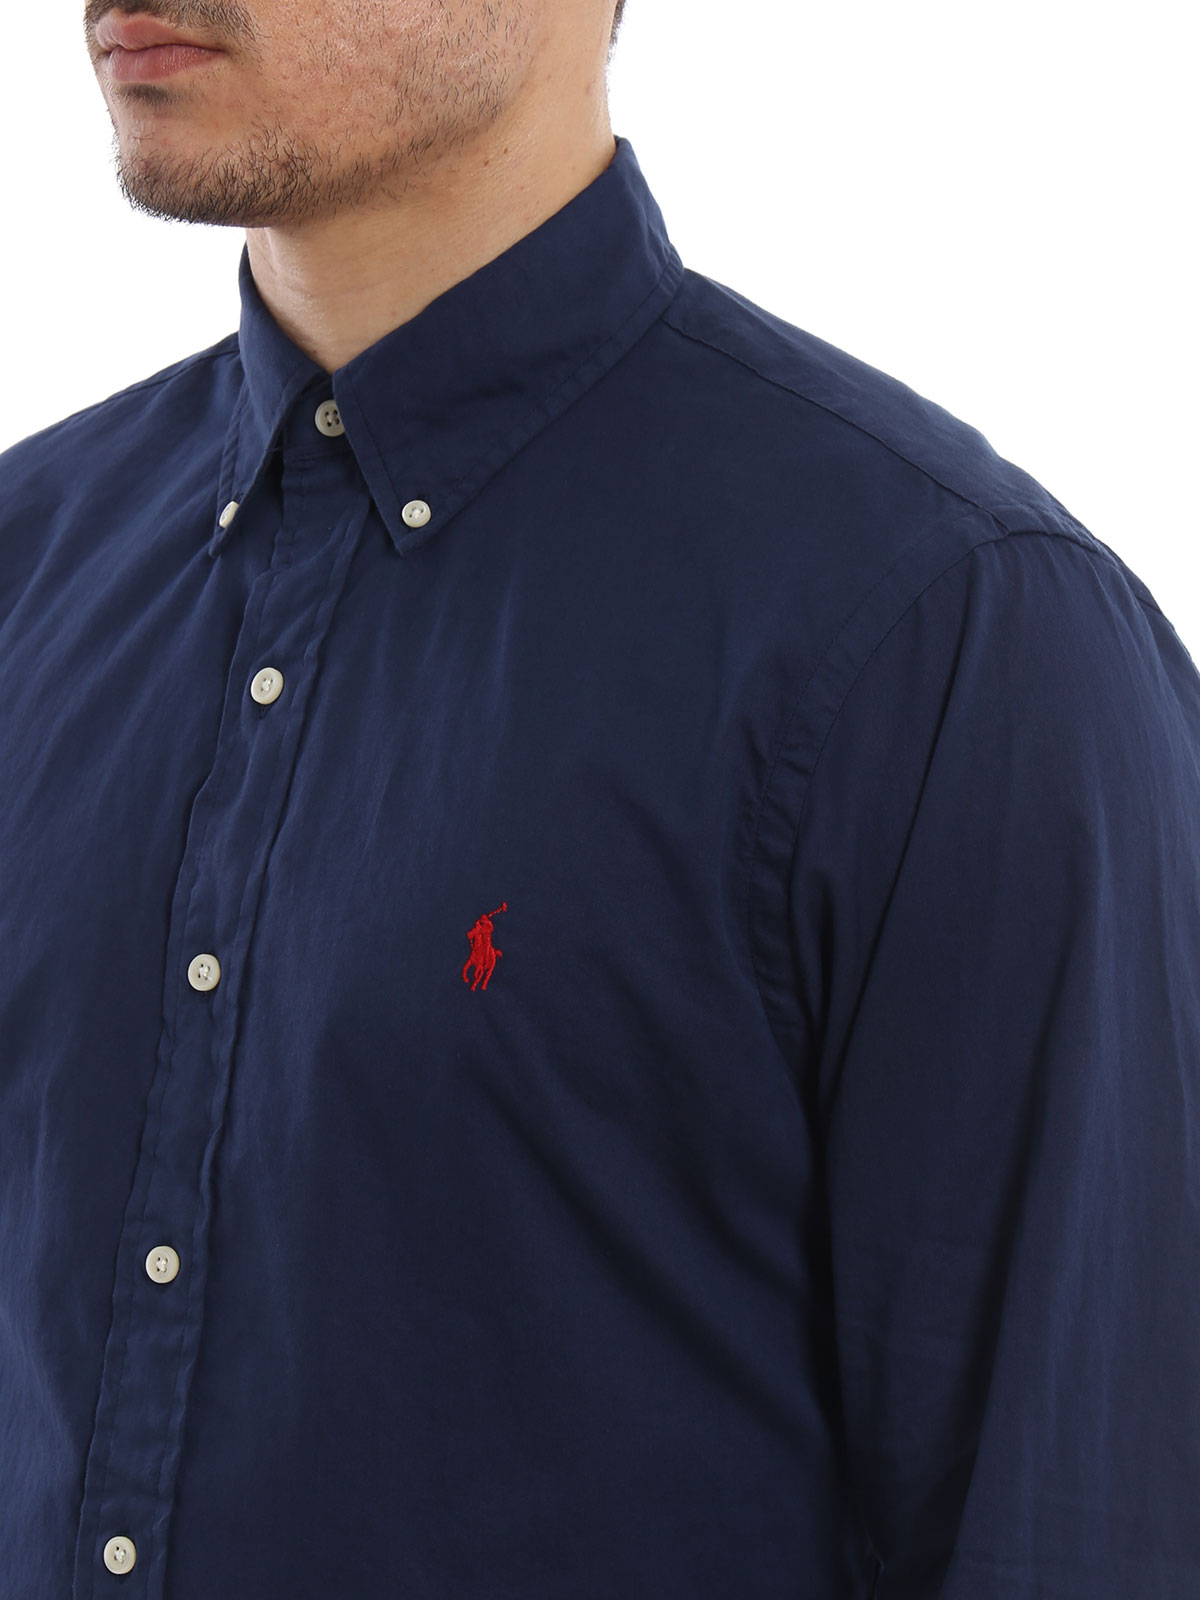 Instruir nicotina mamífero Camisas Polo Ralph Lauren - Camisa - Azul Oscuro - 710741788007